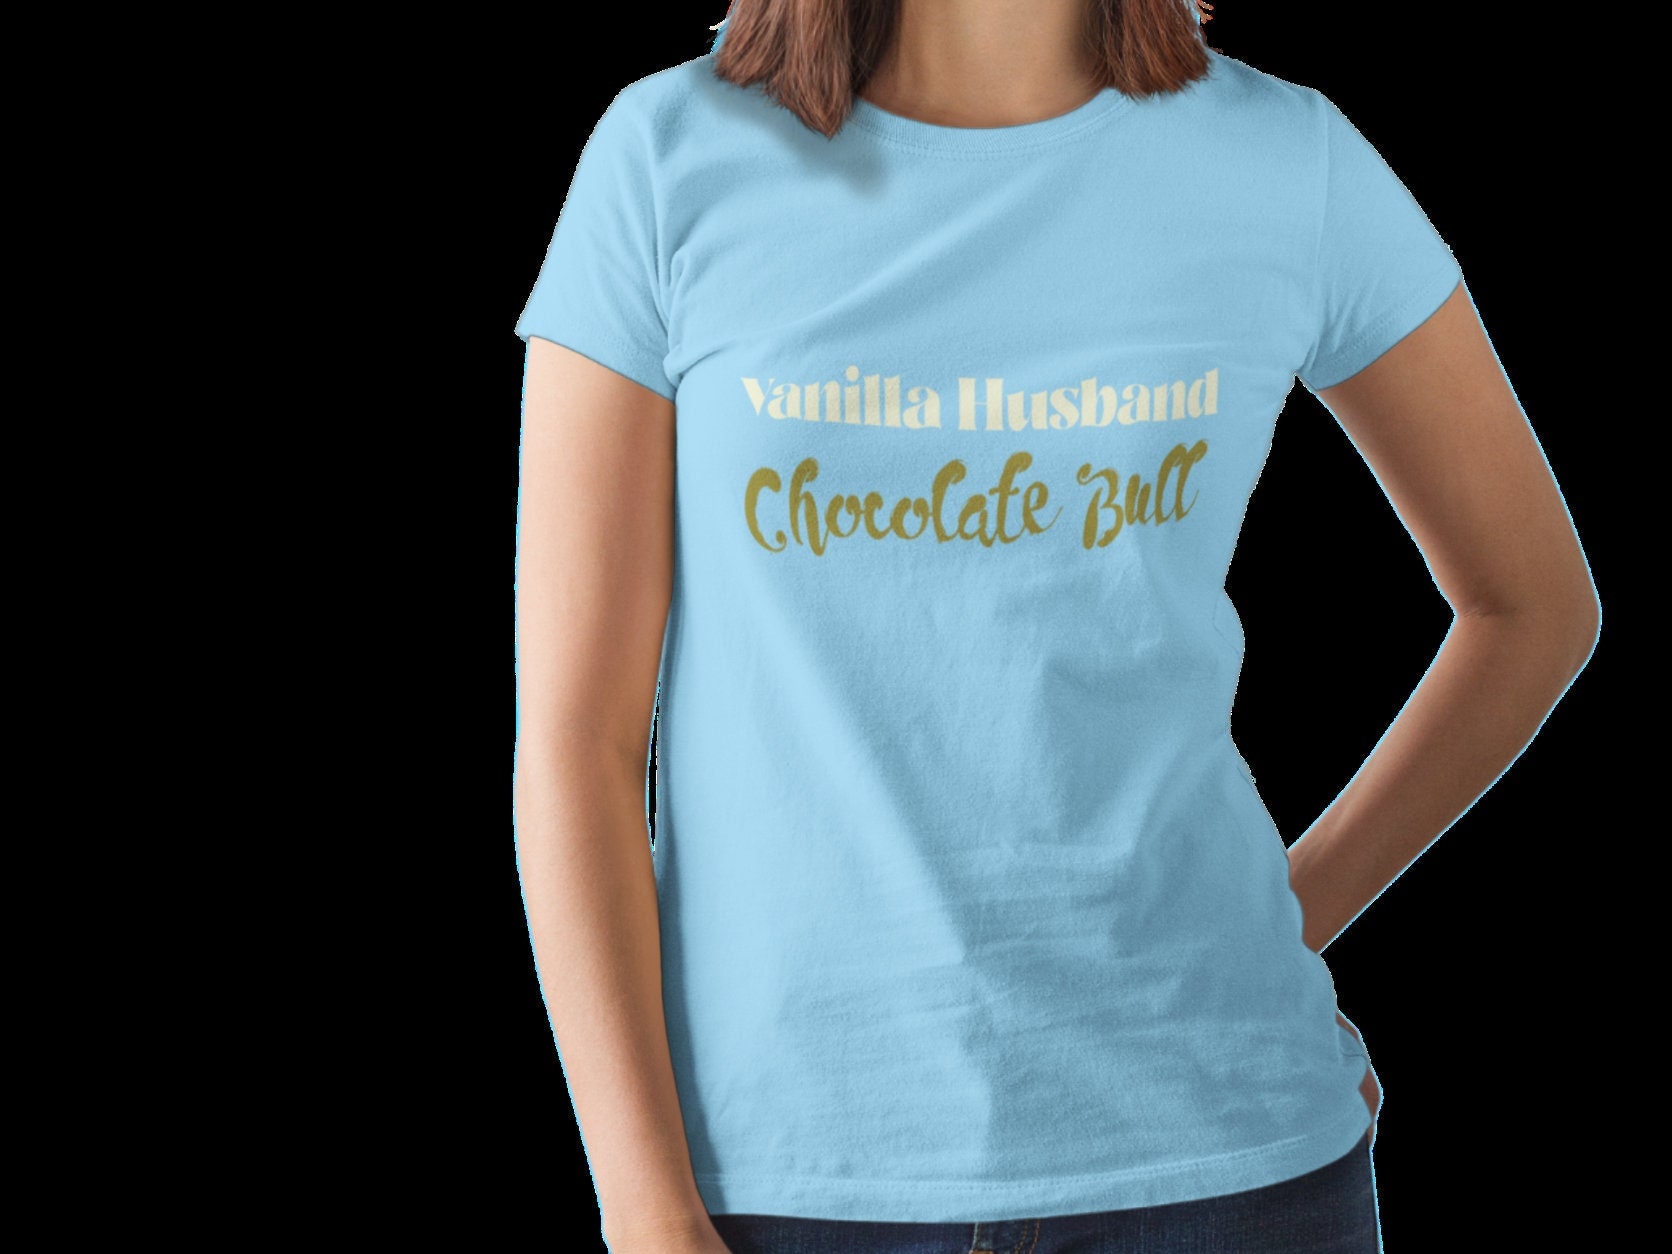 Vanilla Husband Chocolate Bull Shirt Interracial Sex T-shirt picture